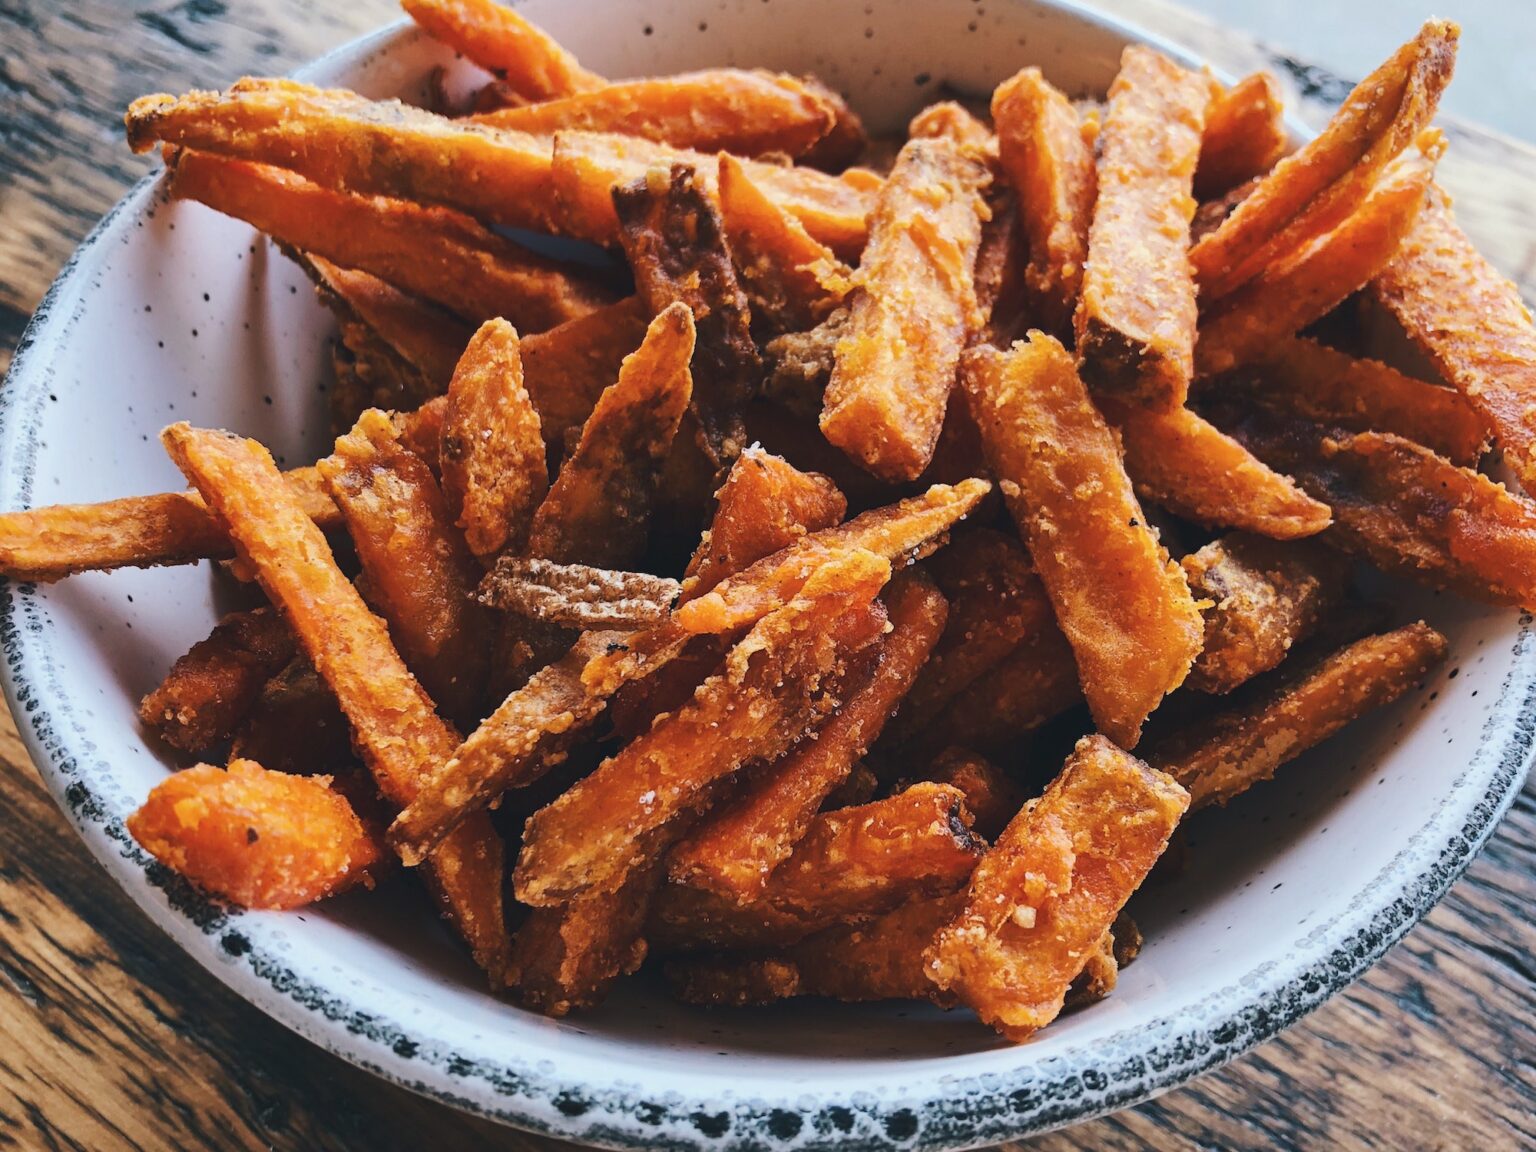 Sweet potato fries in a bowl